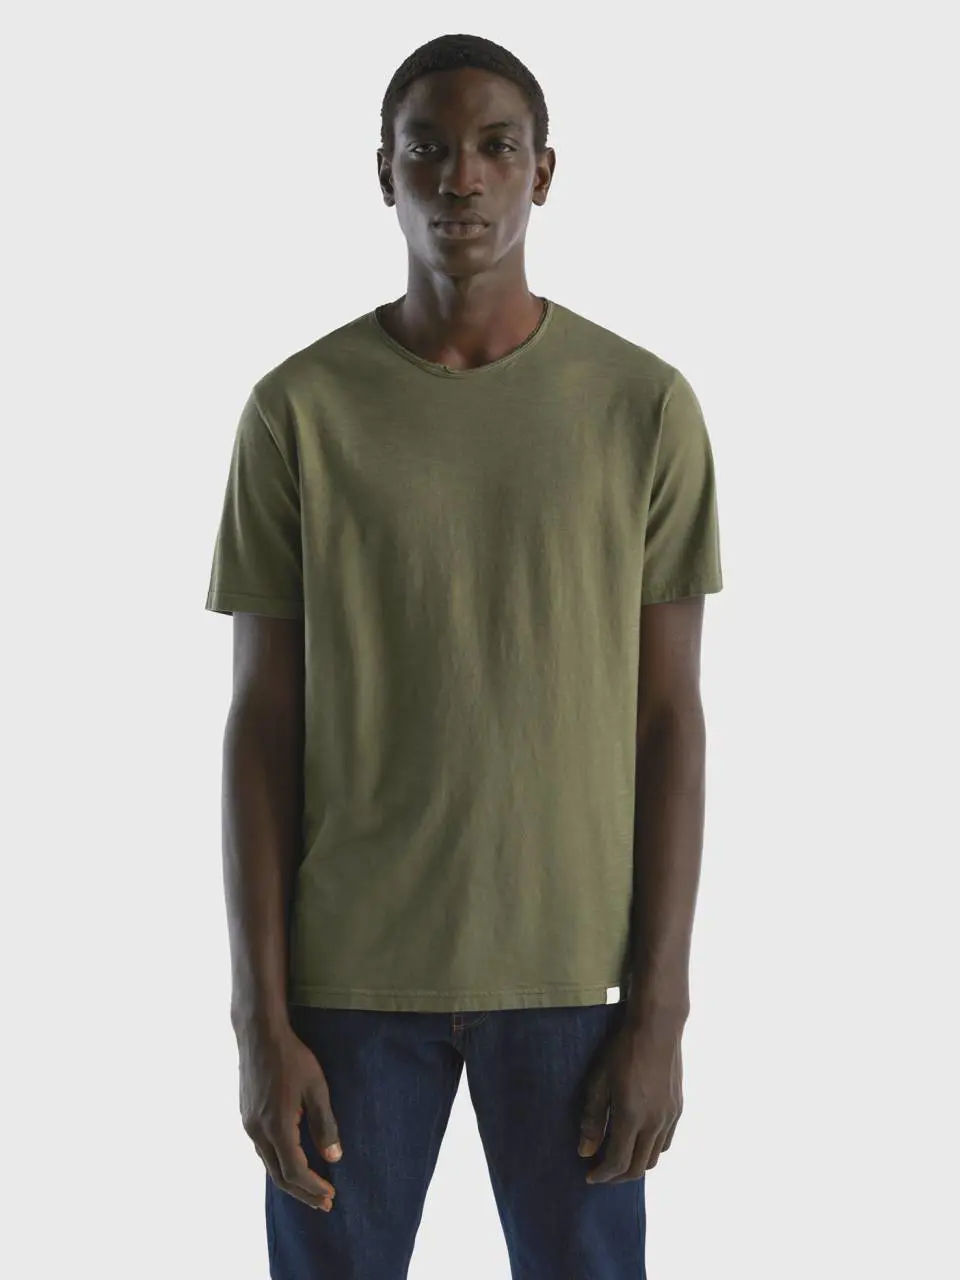 Benetton green t-shirt in slub cotton. 1